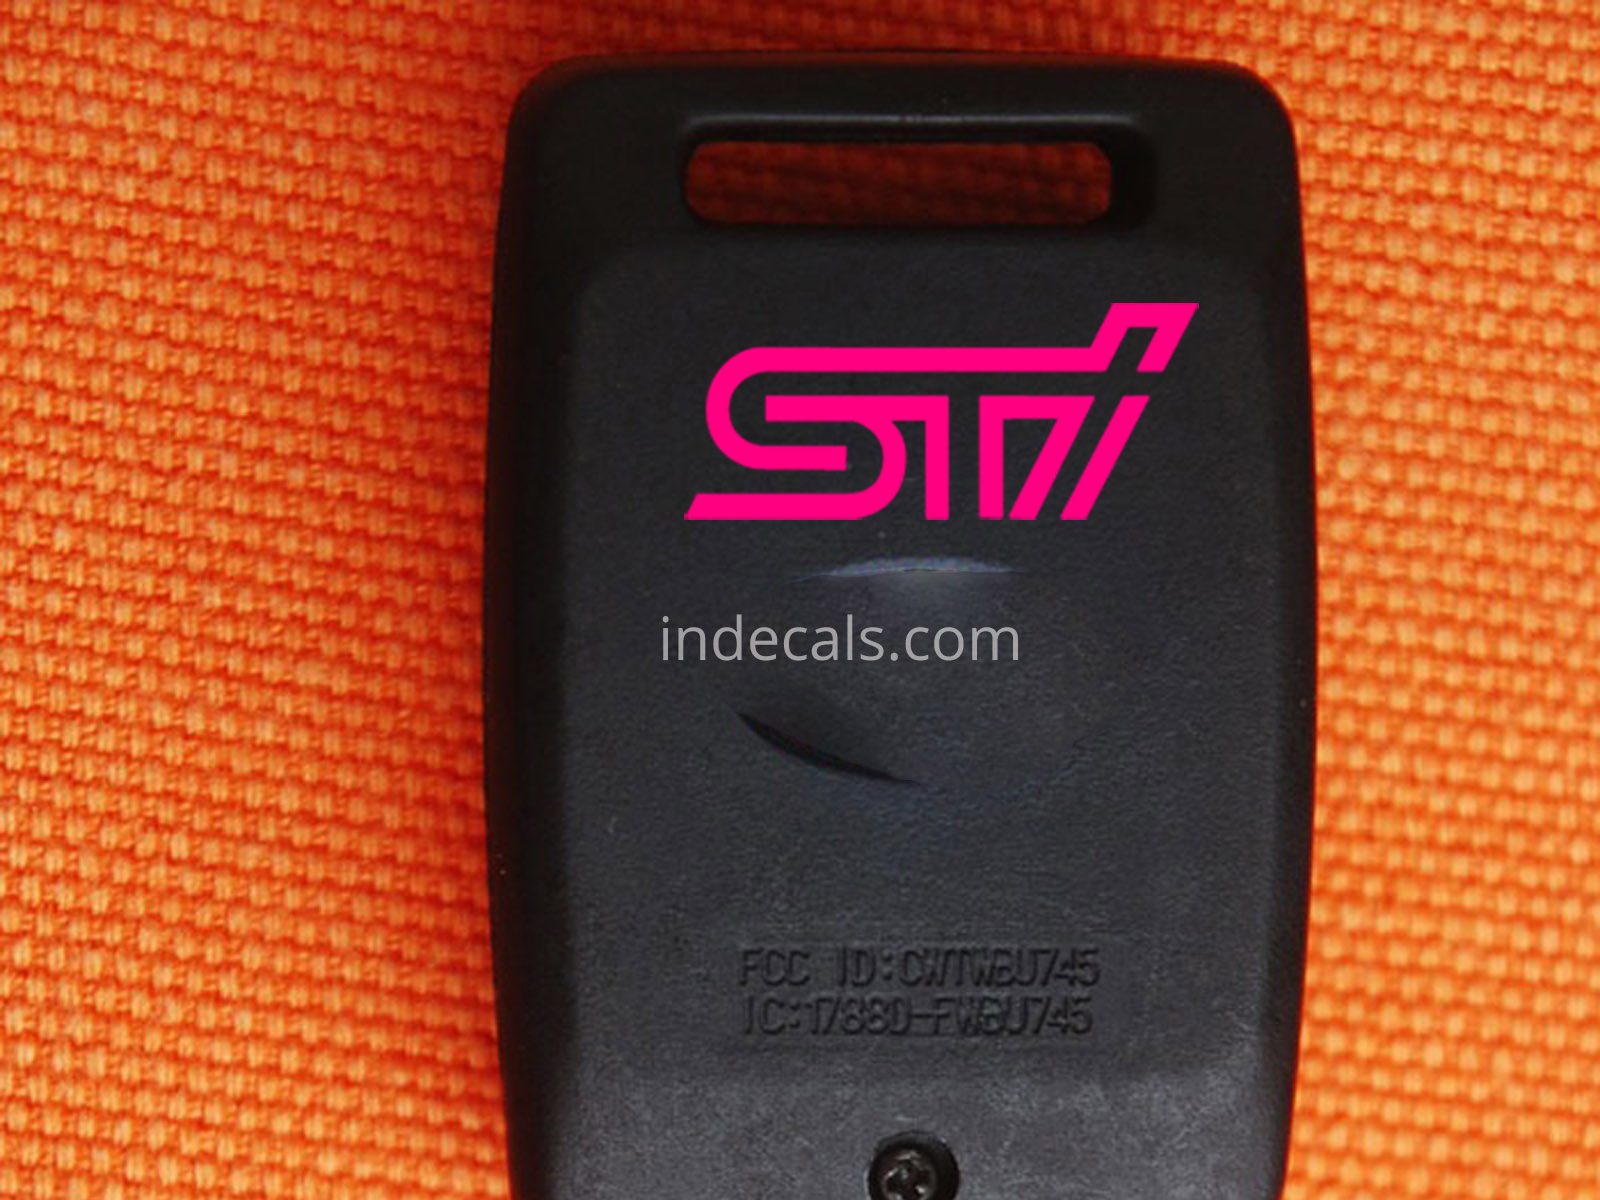 2 x Subaru STI stickers for Key Fob - Pink